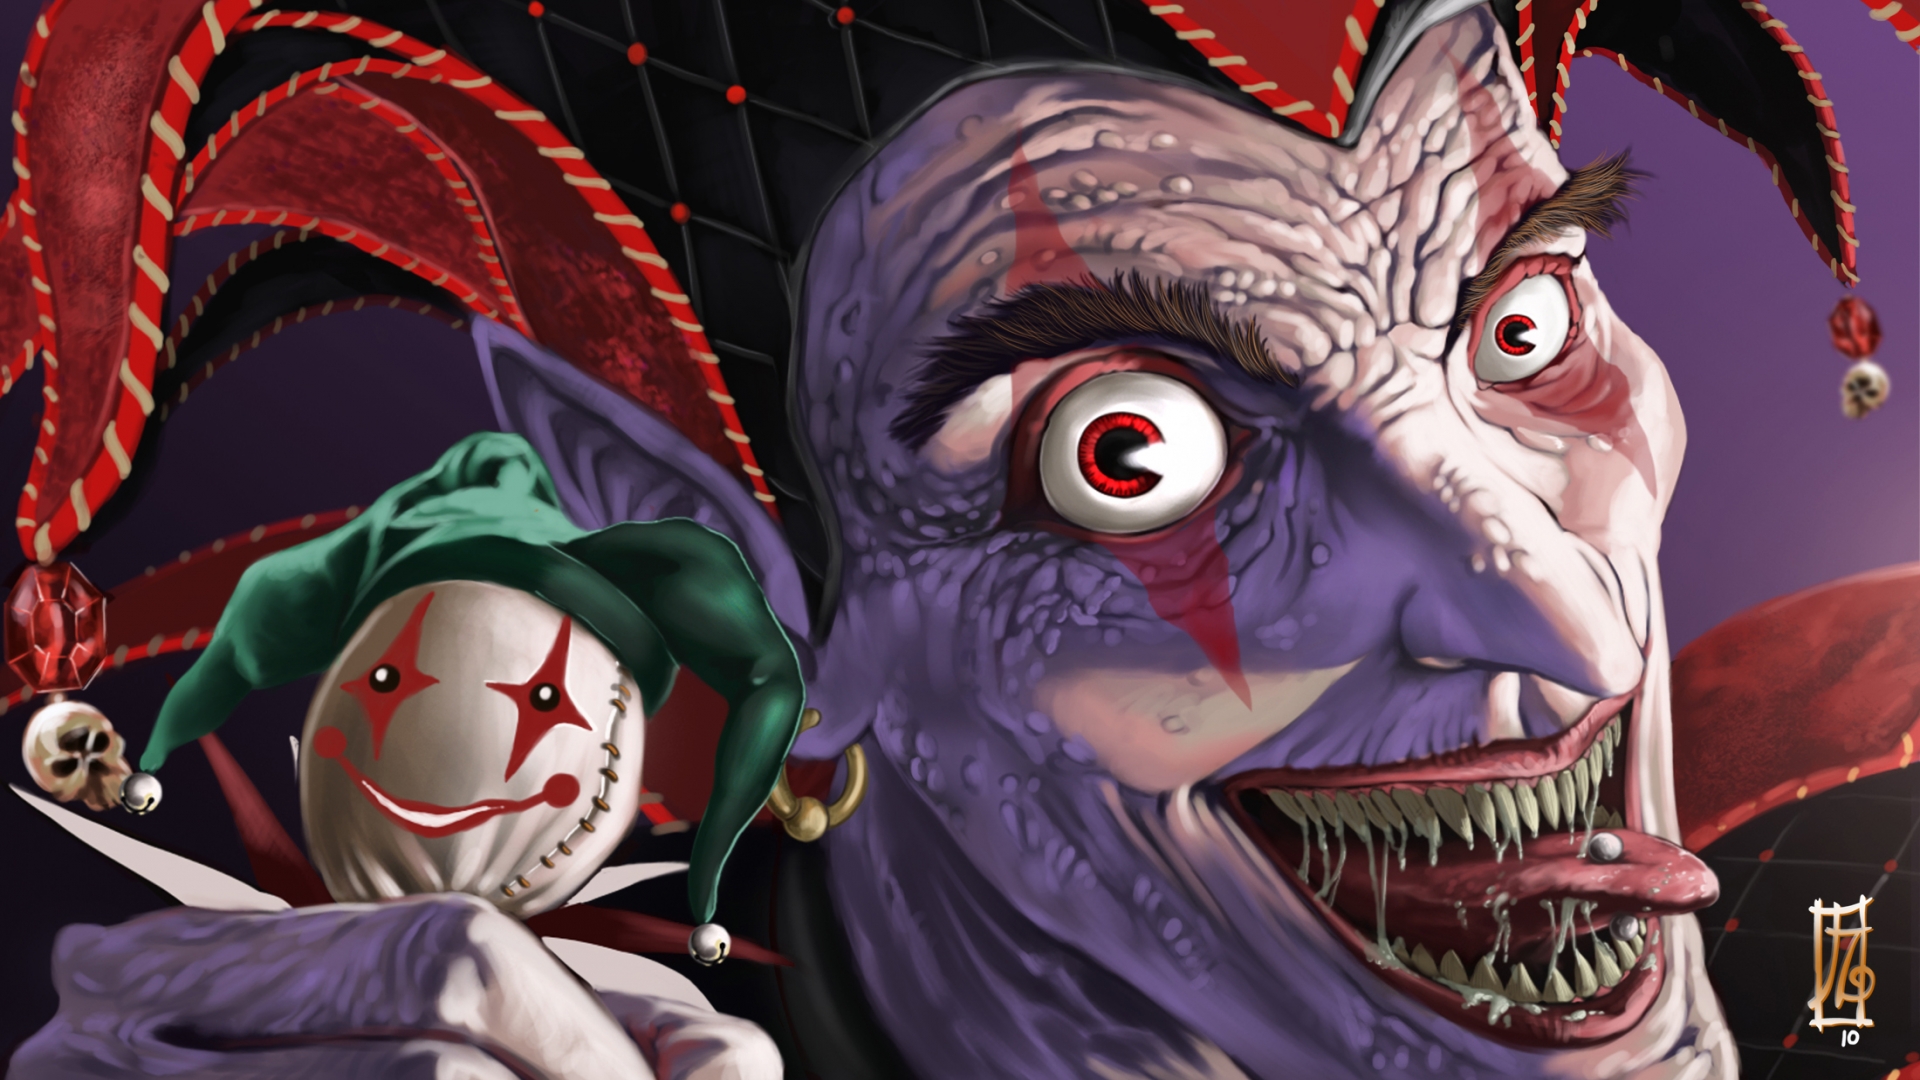 Dark fantasy scary creepy spooky evil fangs makeup clown faves eyes pov art cartoon wallpaperx1080